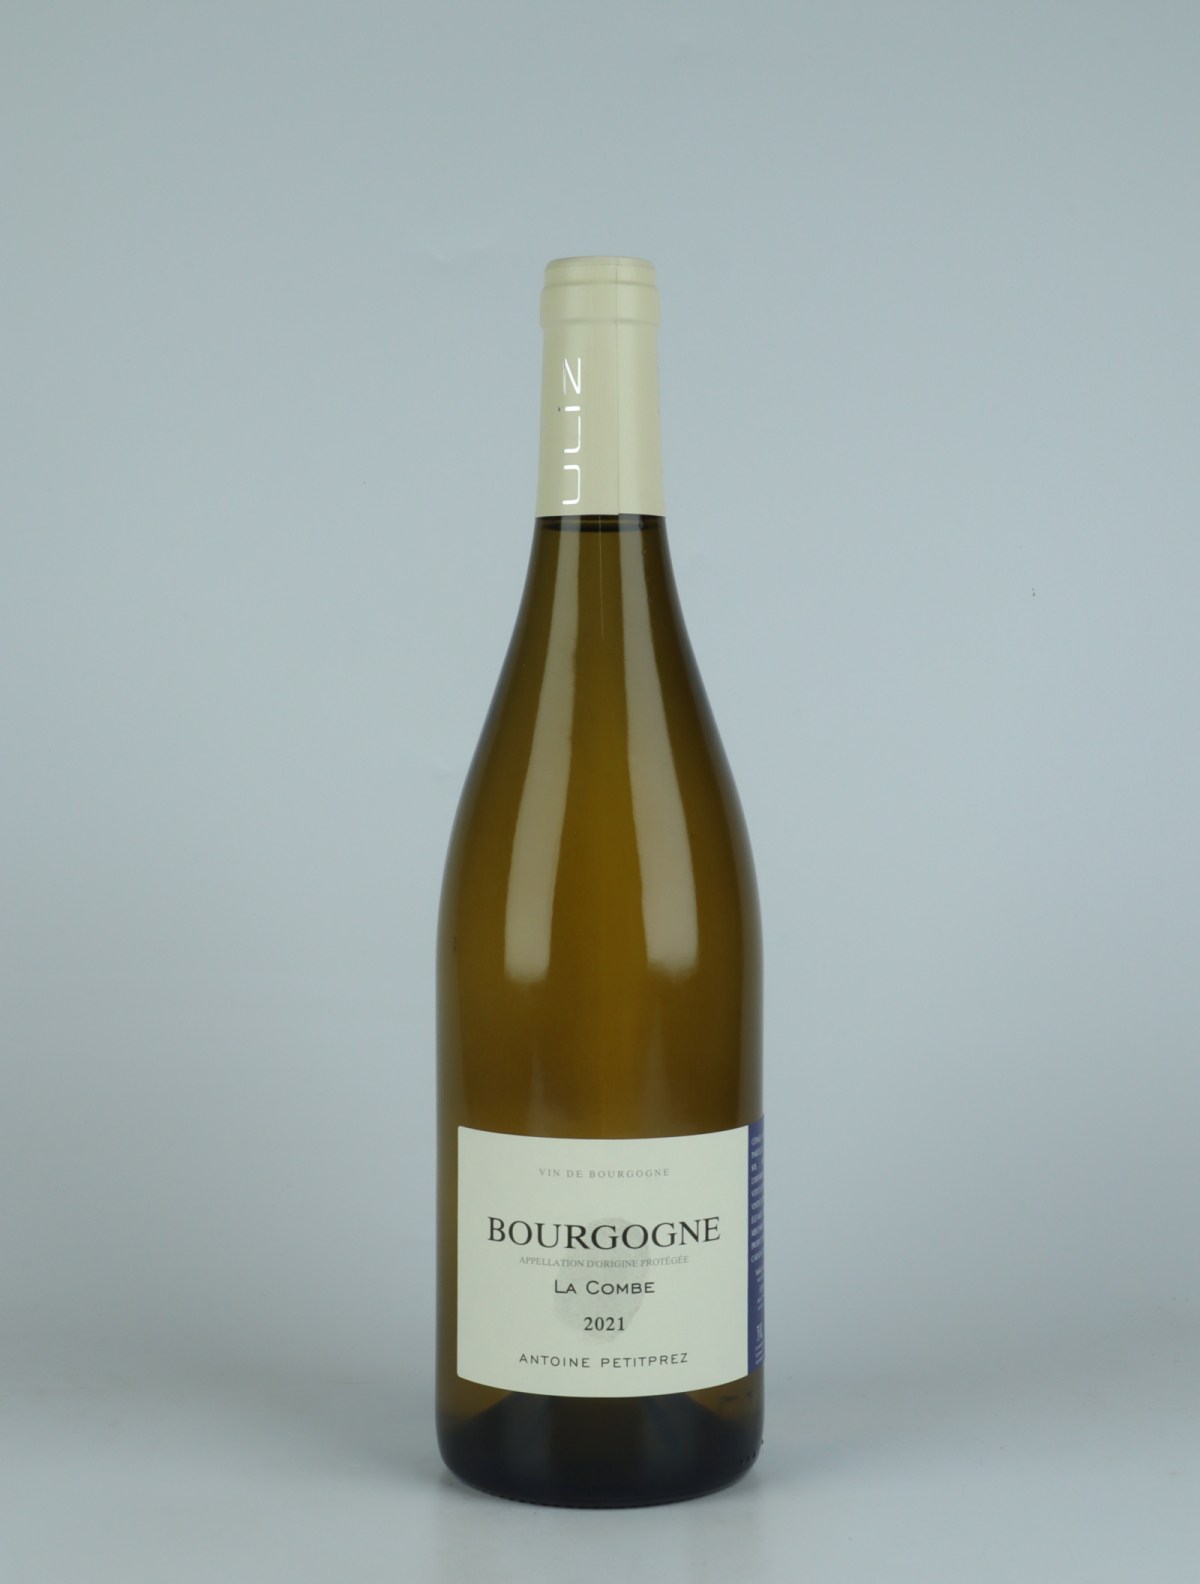 En flaske 2021 Bourgogne Blanc - La Combe Hvidvin fra Antoine Petitprez, Bourgogne i Frankrig